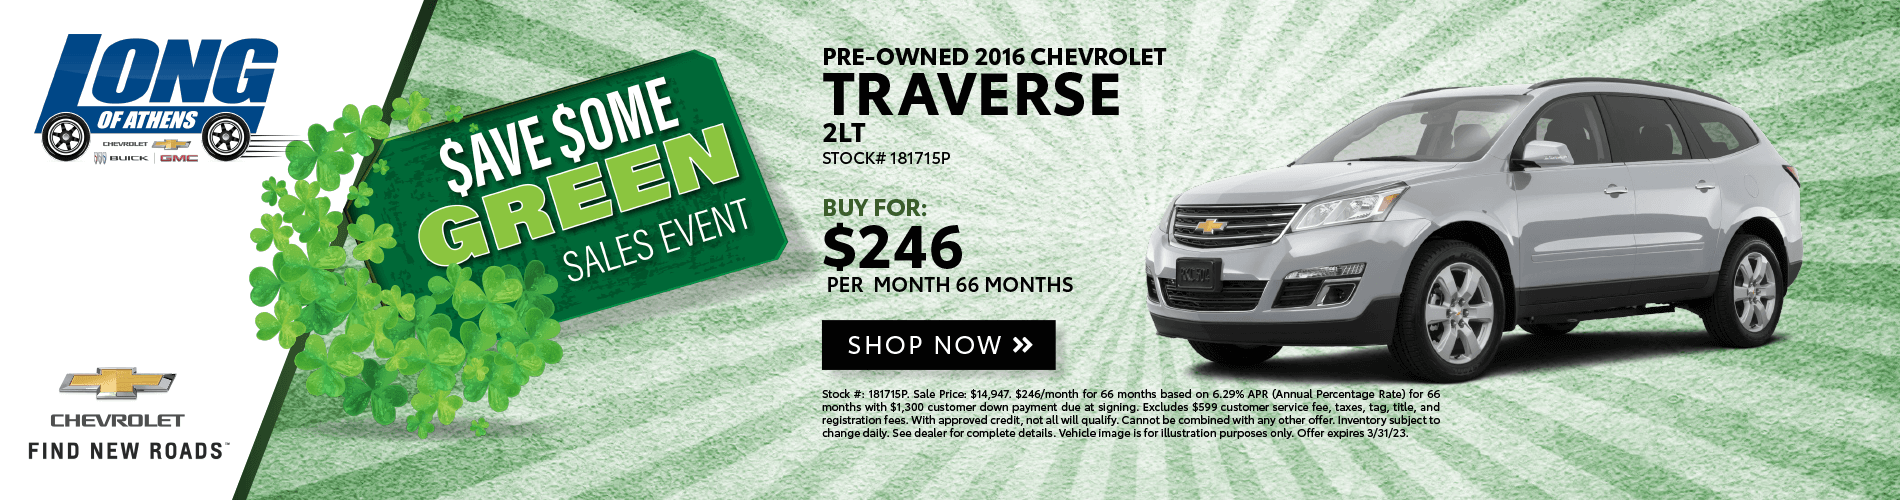 2016 Chevy Traverse